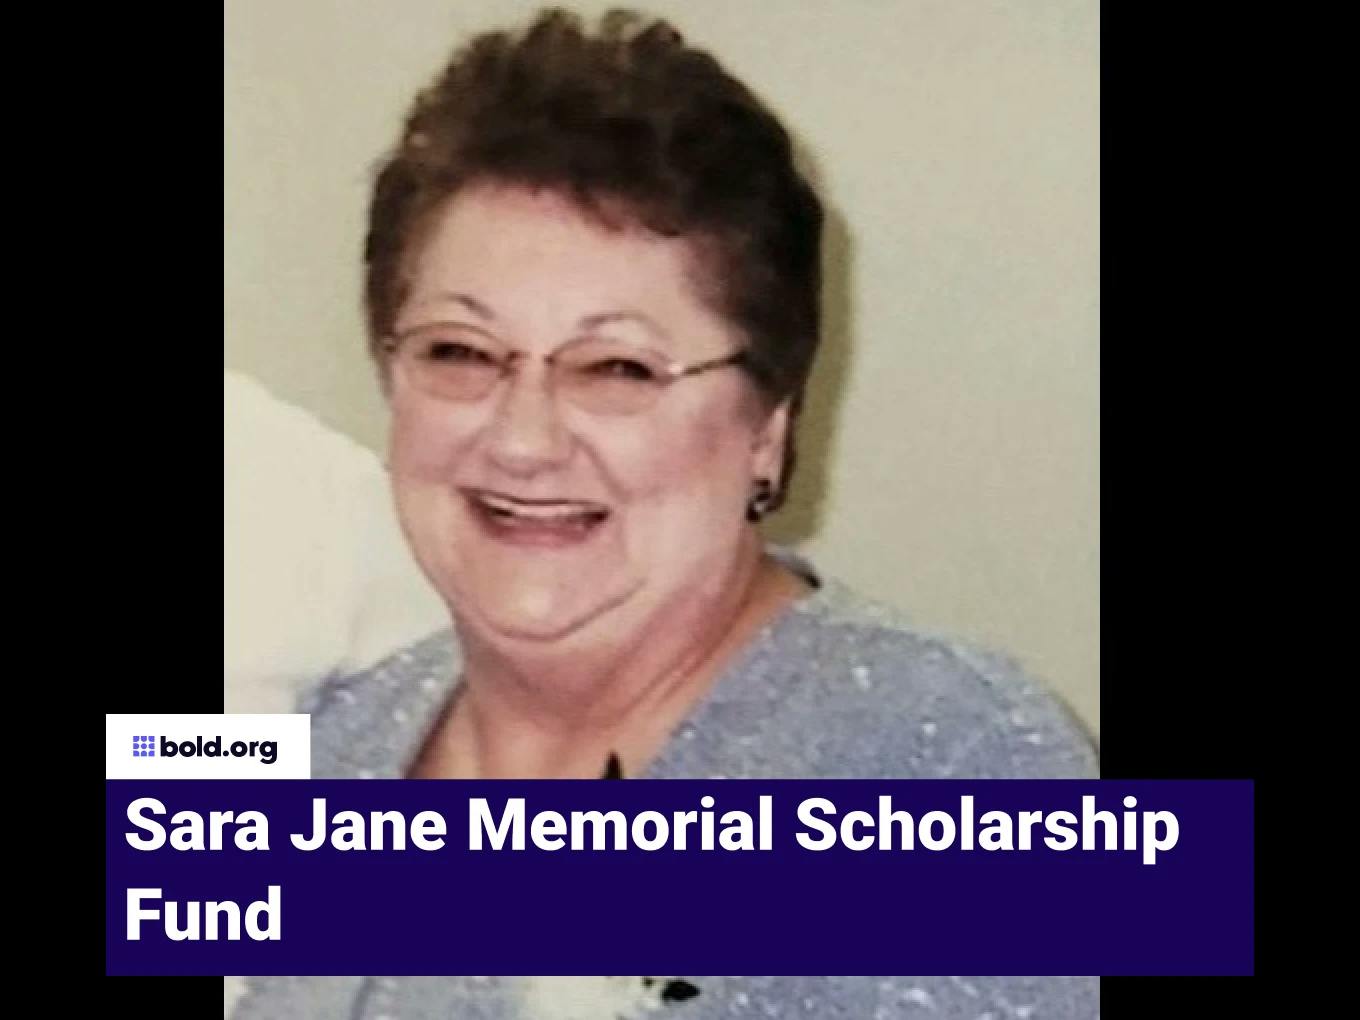 Sara Jane Memorial Scholarship Fund